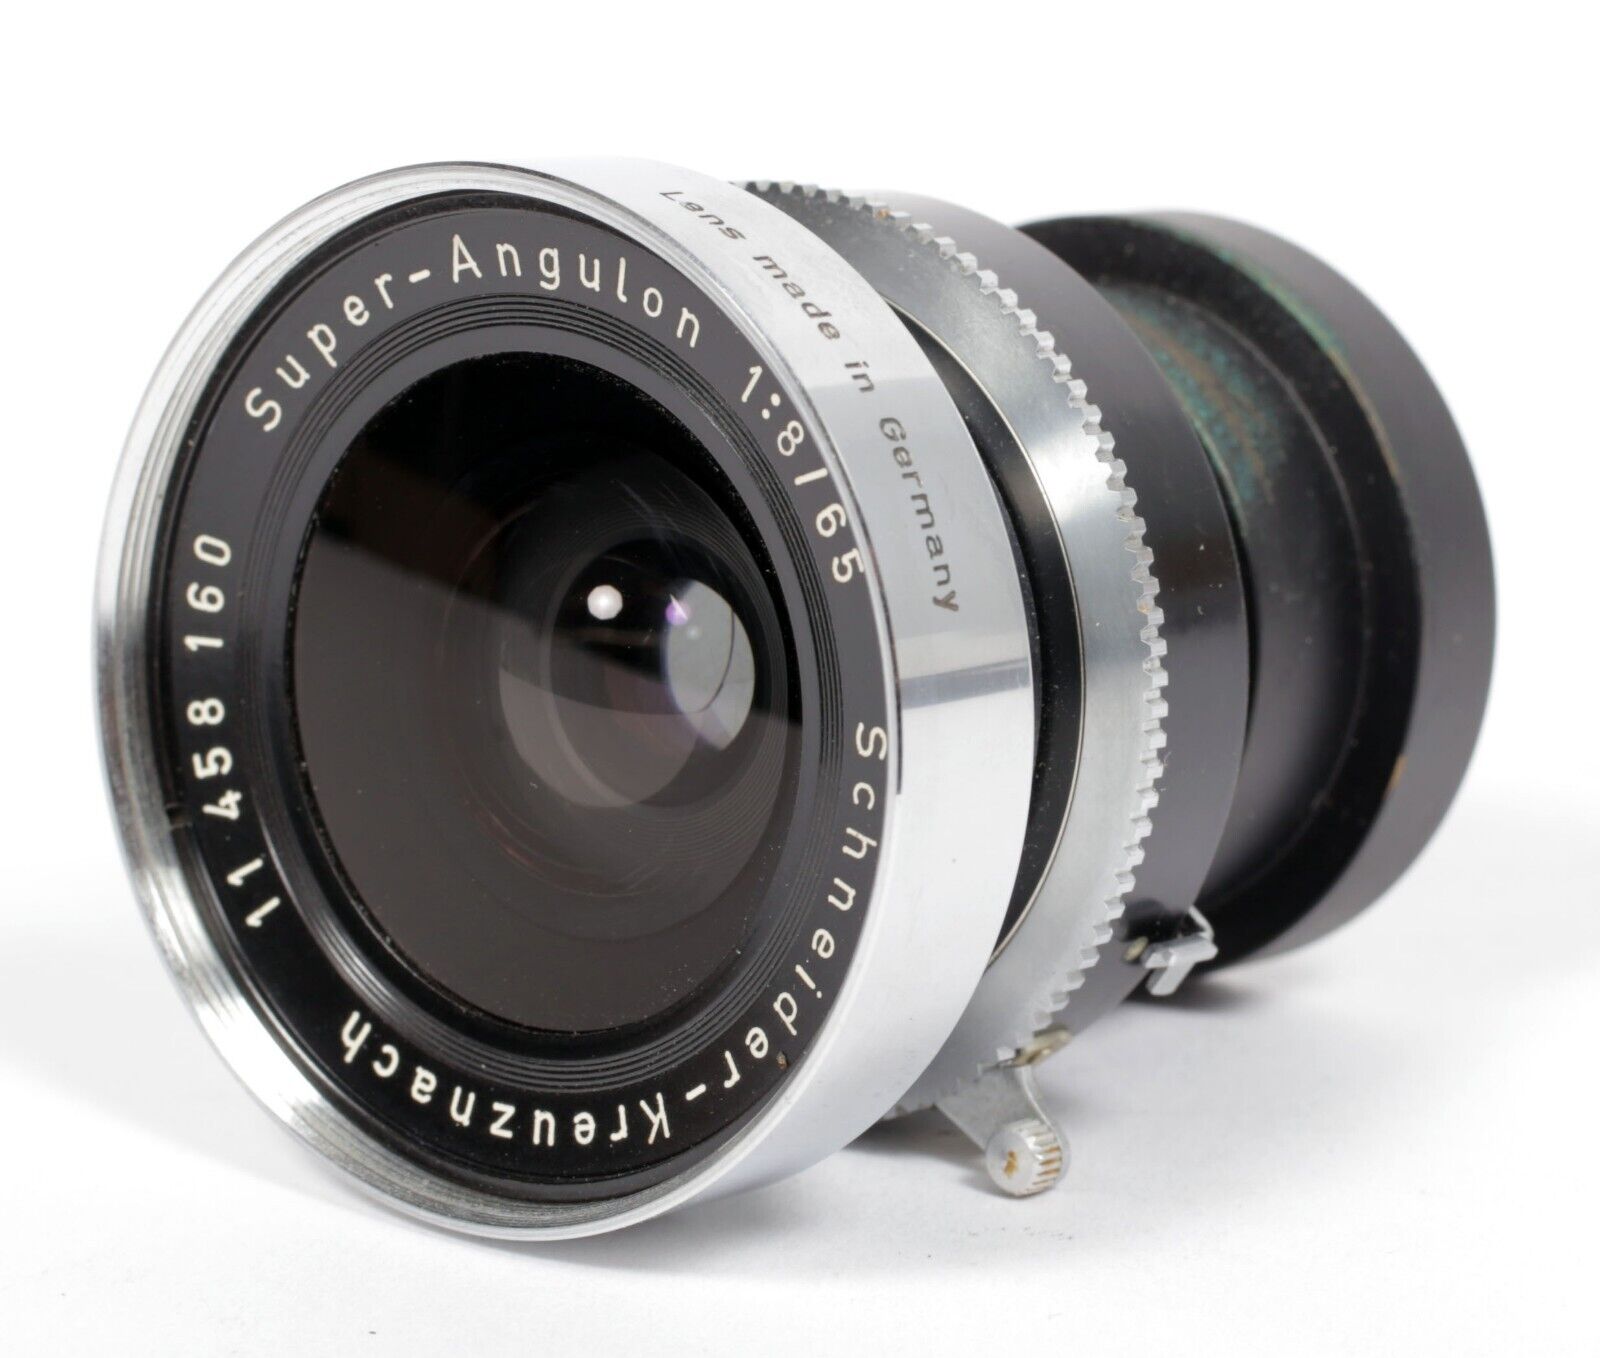 Schneider Super Angulon 65mm F8 lens in Compur #00 (#160)